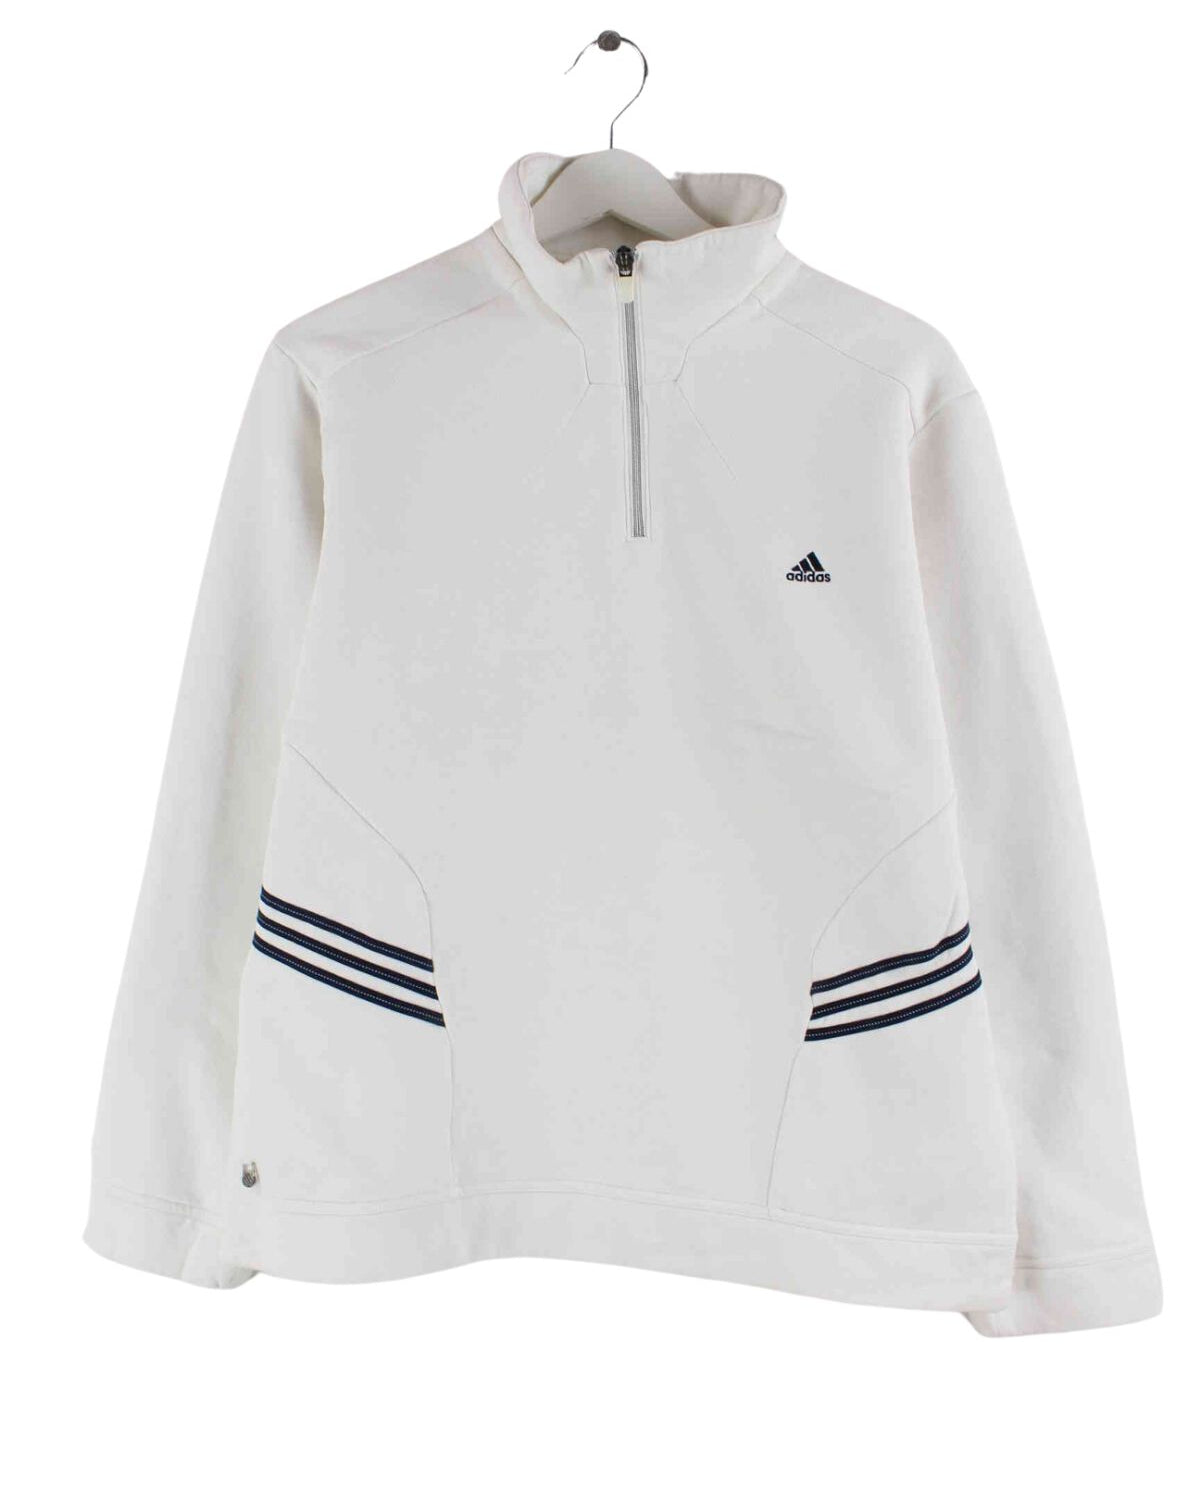 Adidas Damen 90s Vintage Half Zip Sweater Weiß S (front image)